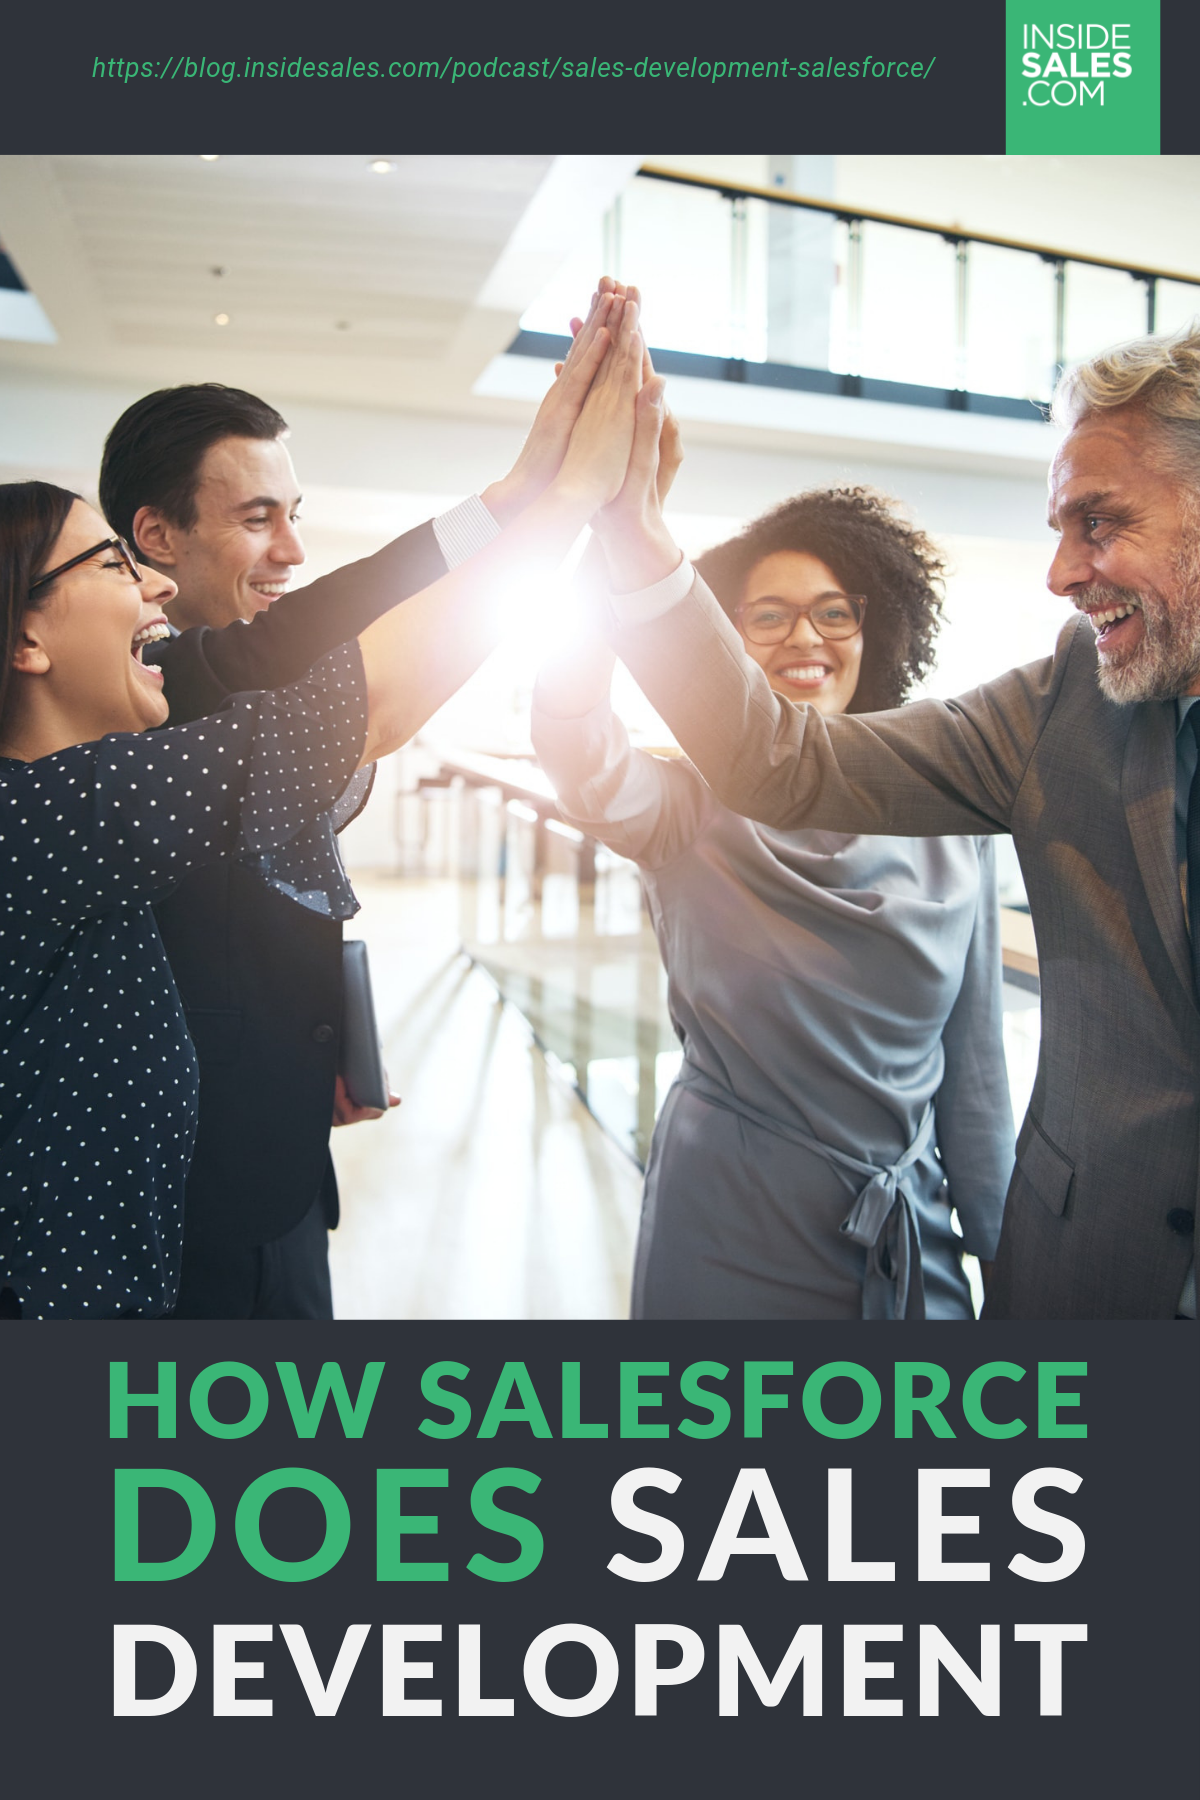 How Salesforce Does Sales Development https://resources.insidesales.com/blog/podcast/sales-development-salesforce/